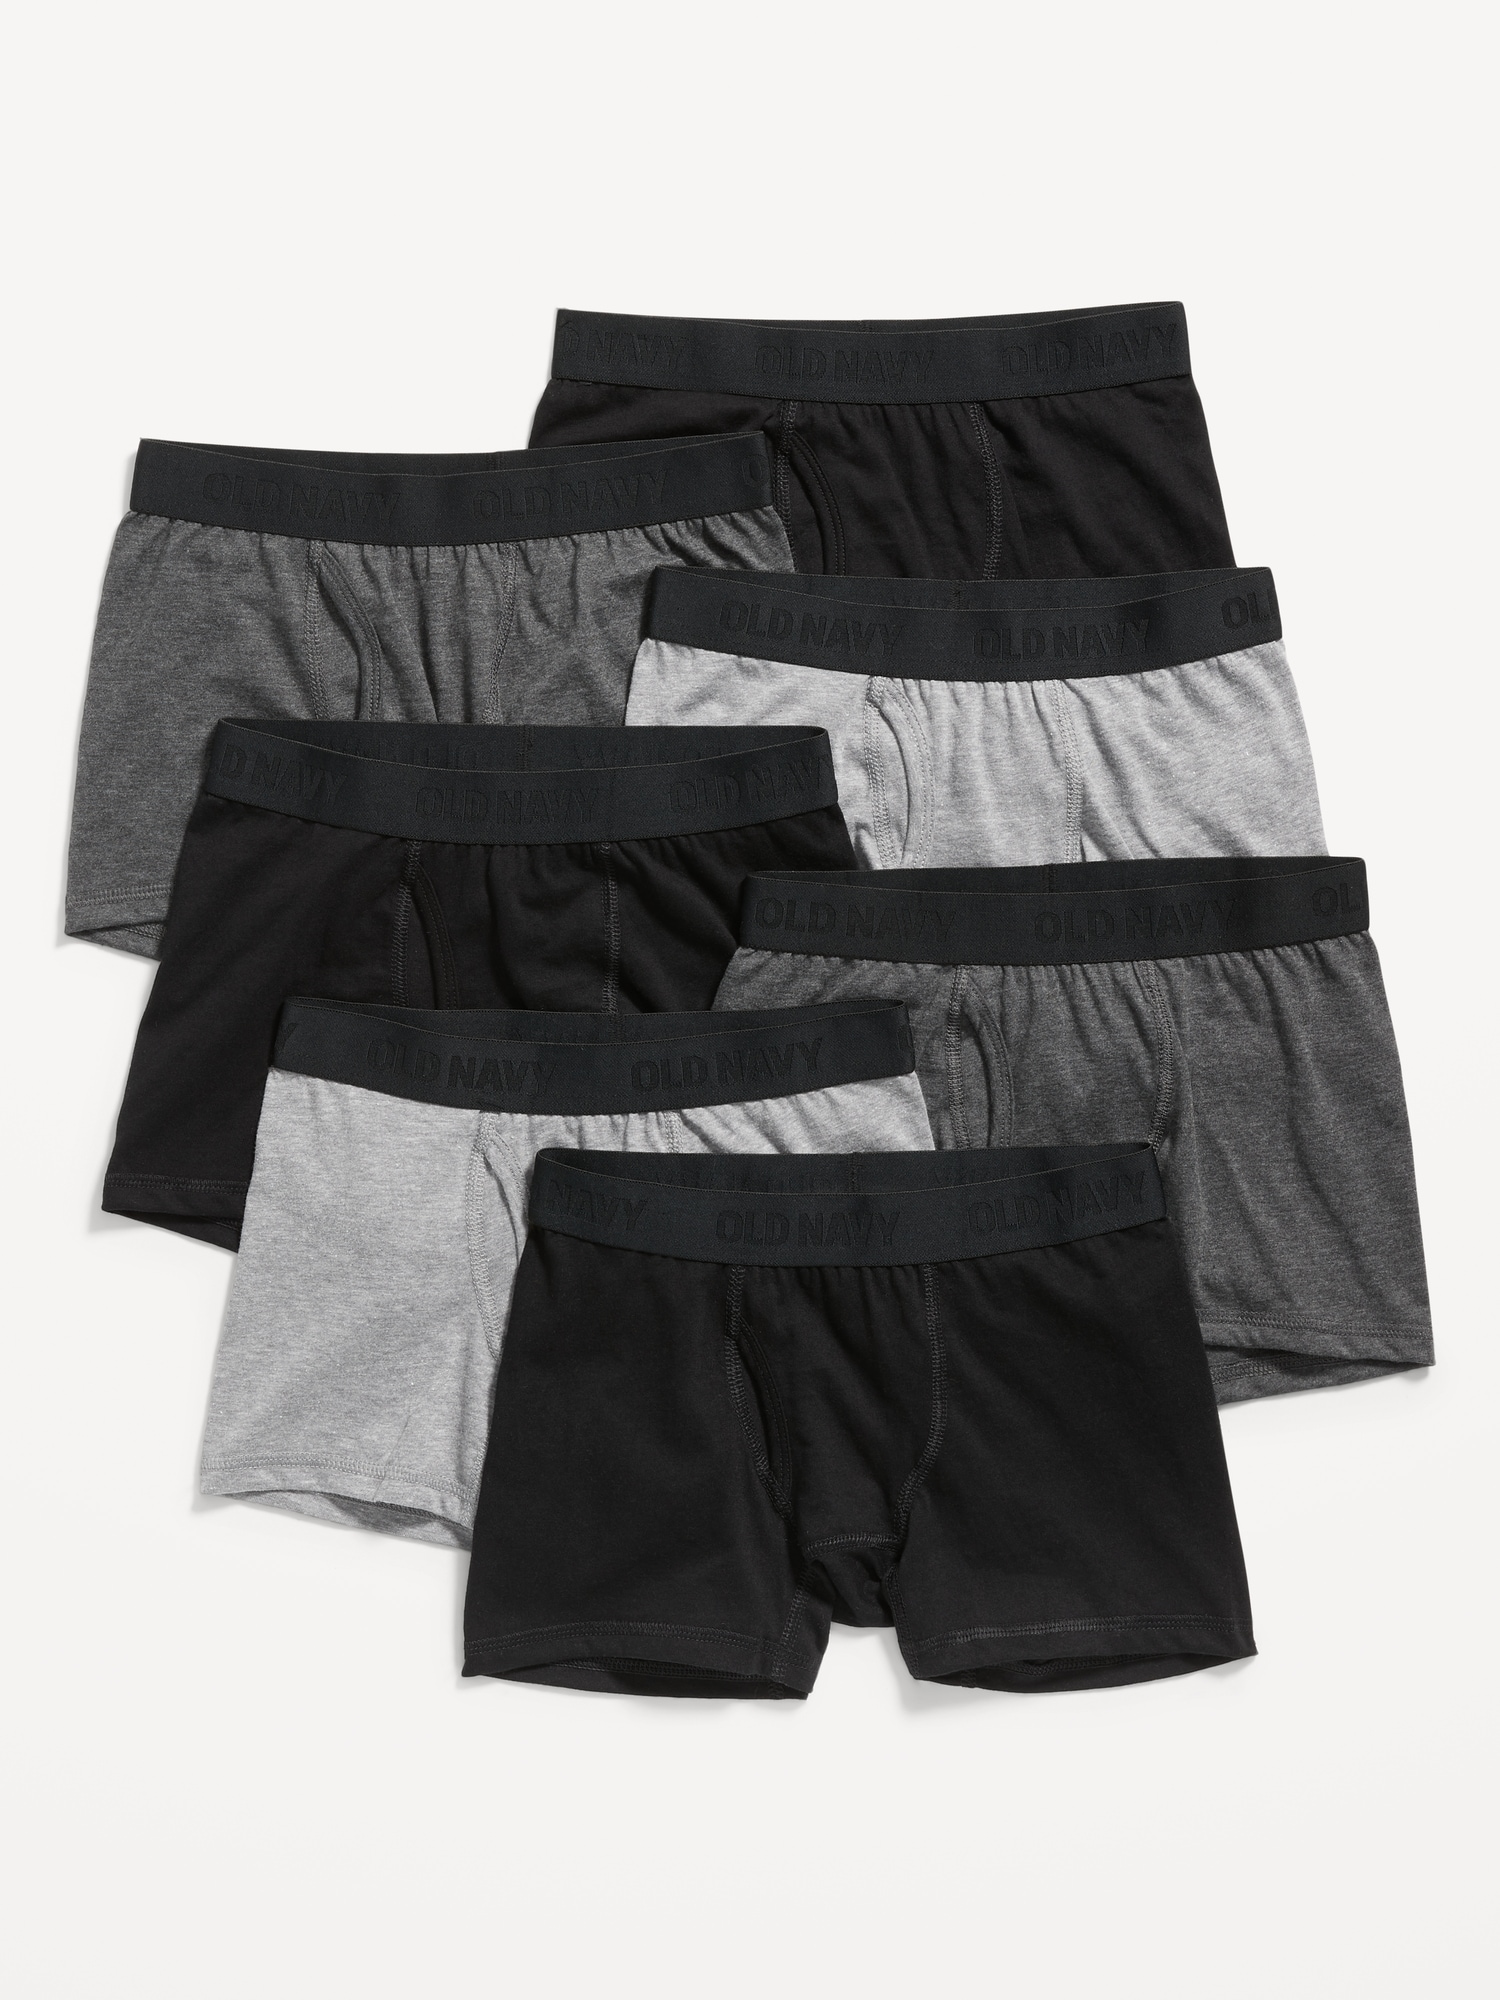 Old Navy Boxer-Briefs Underwear 7-Pack for Boys black. 1